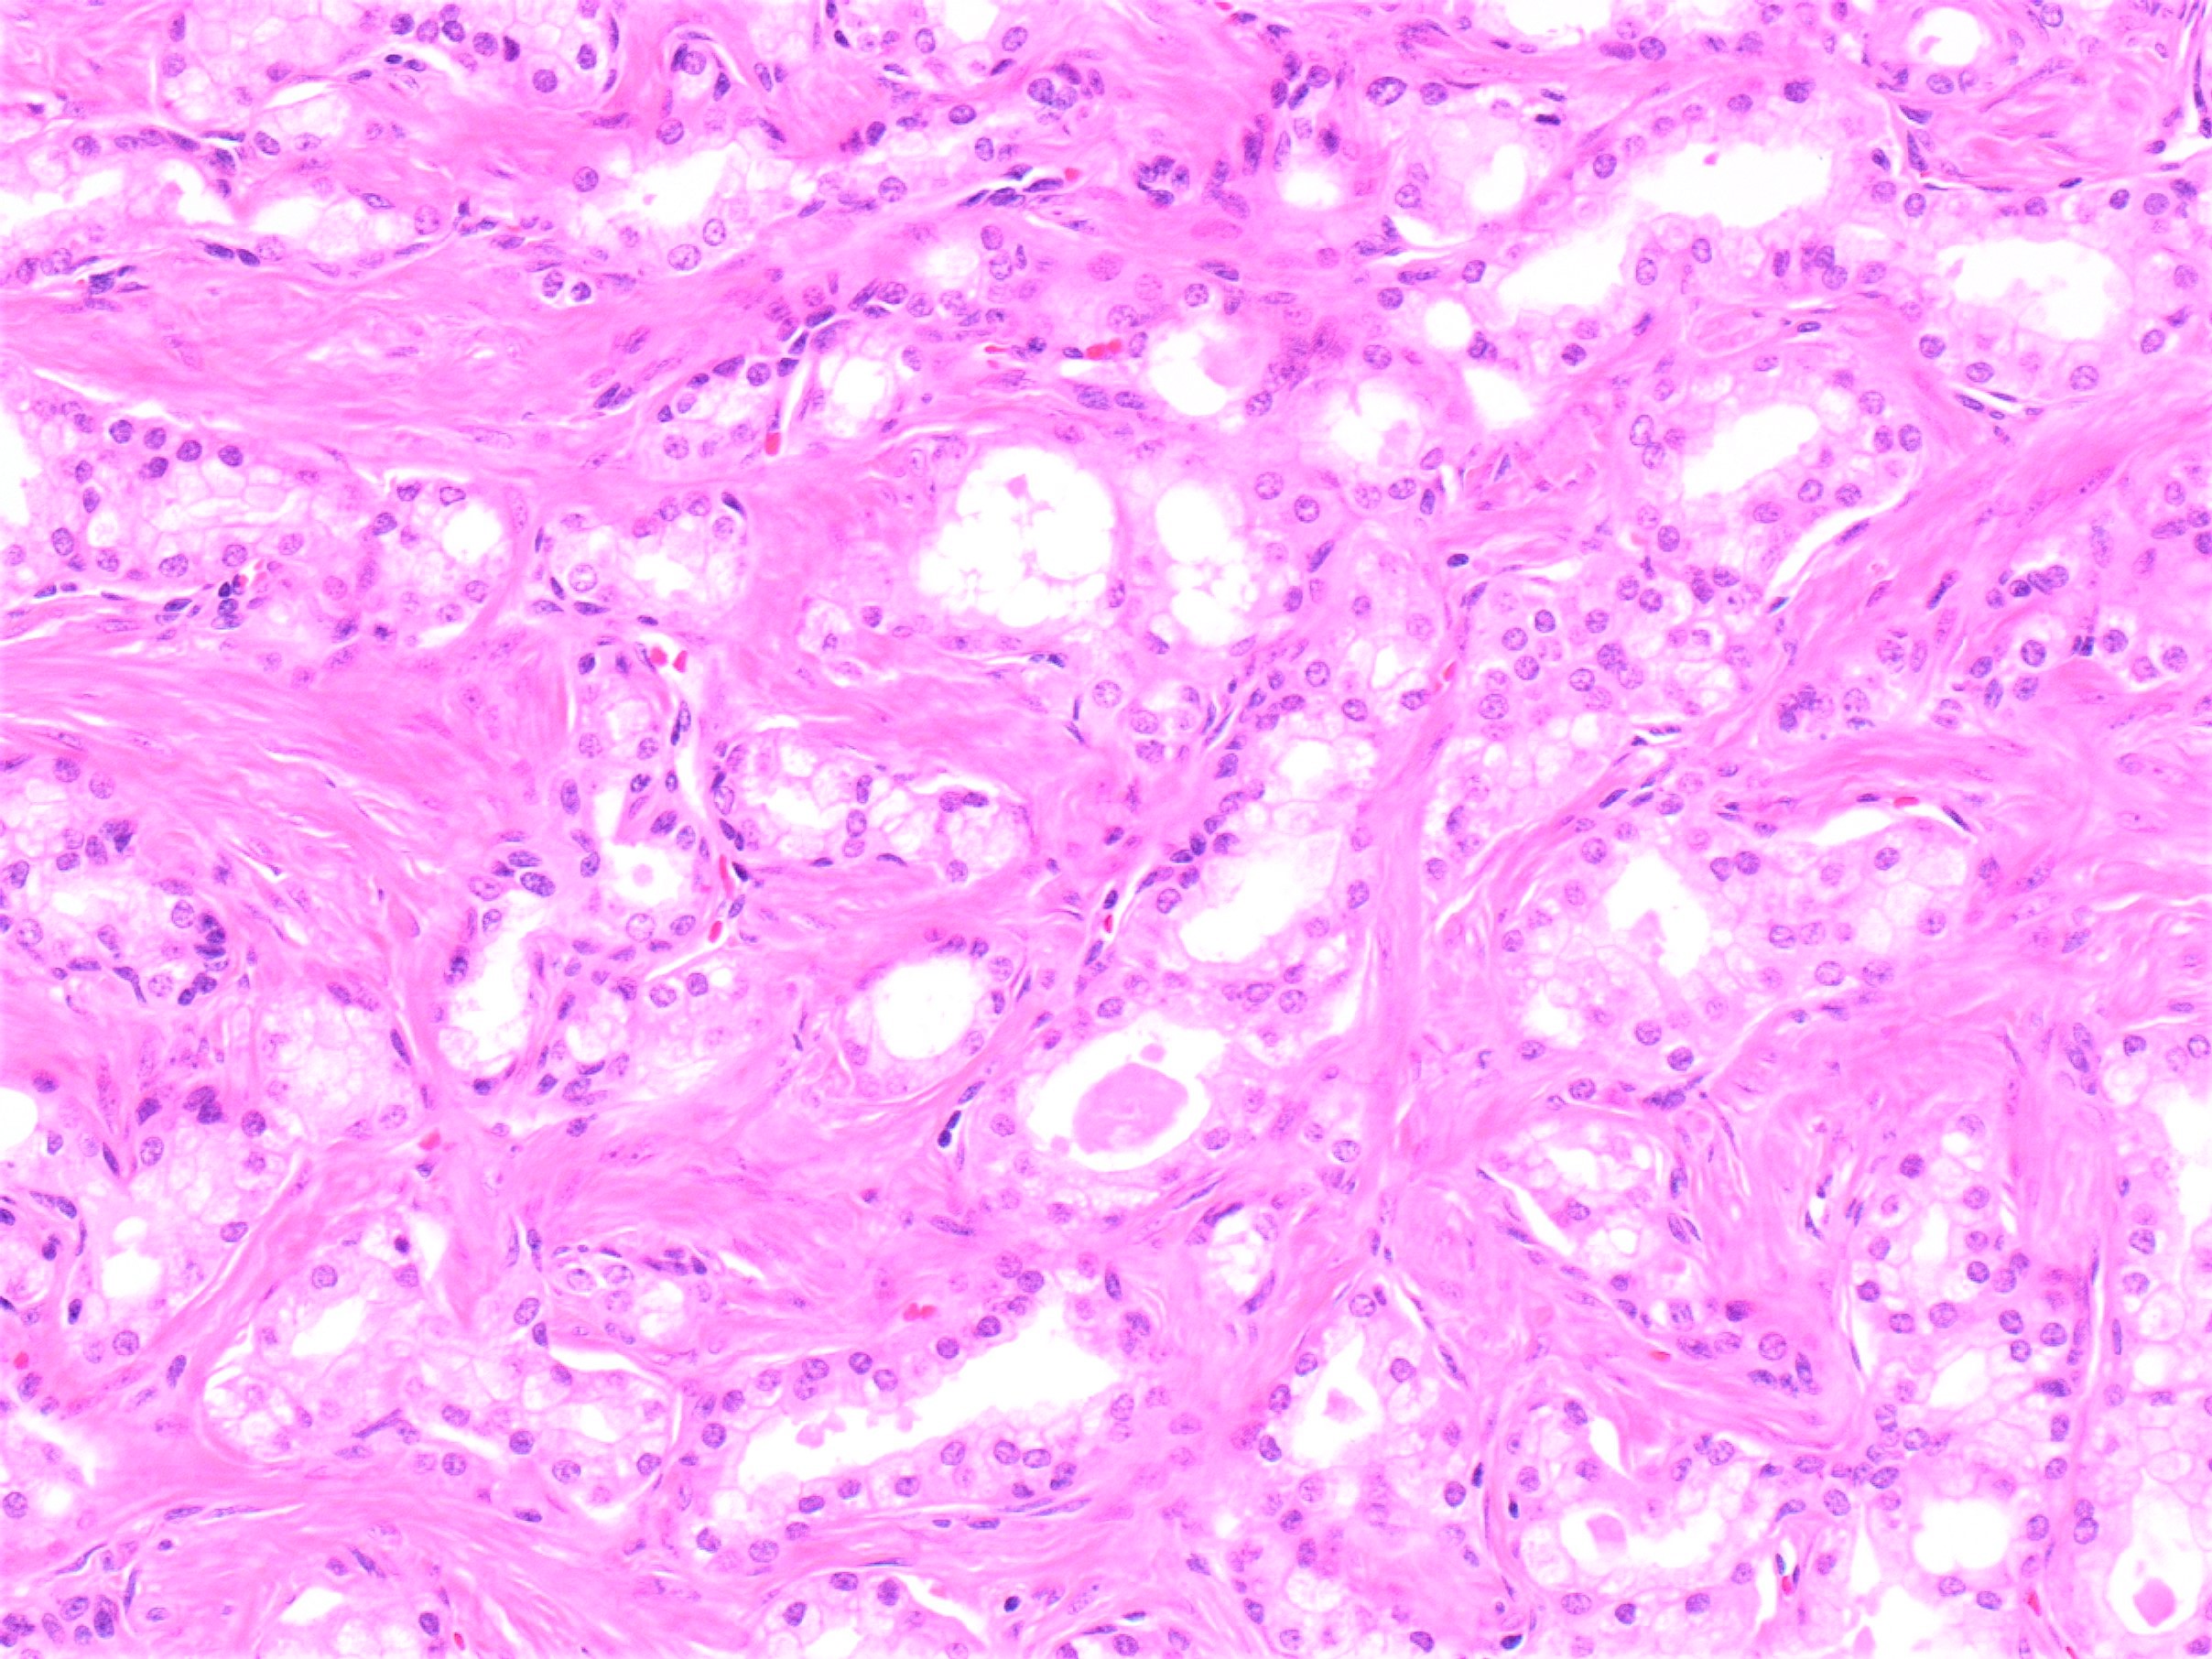 Esophagus squamous papilloma pathology - ESOPHAGEAL SQUAMOUS PAPILLOMA histologia giardiei